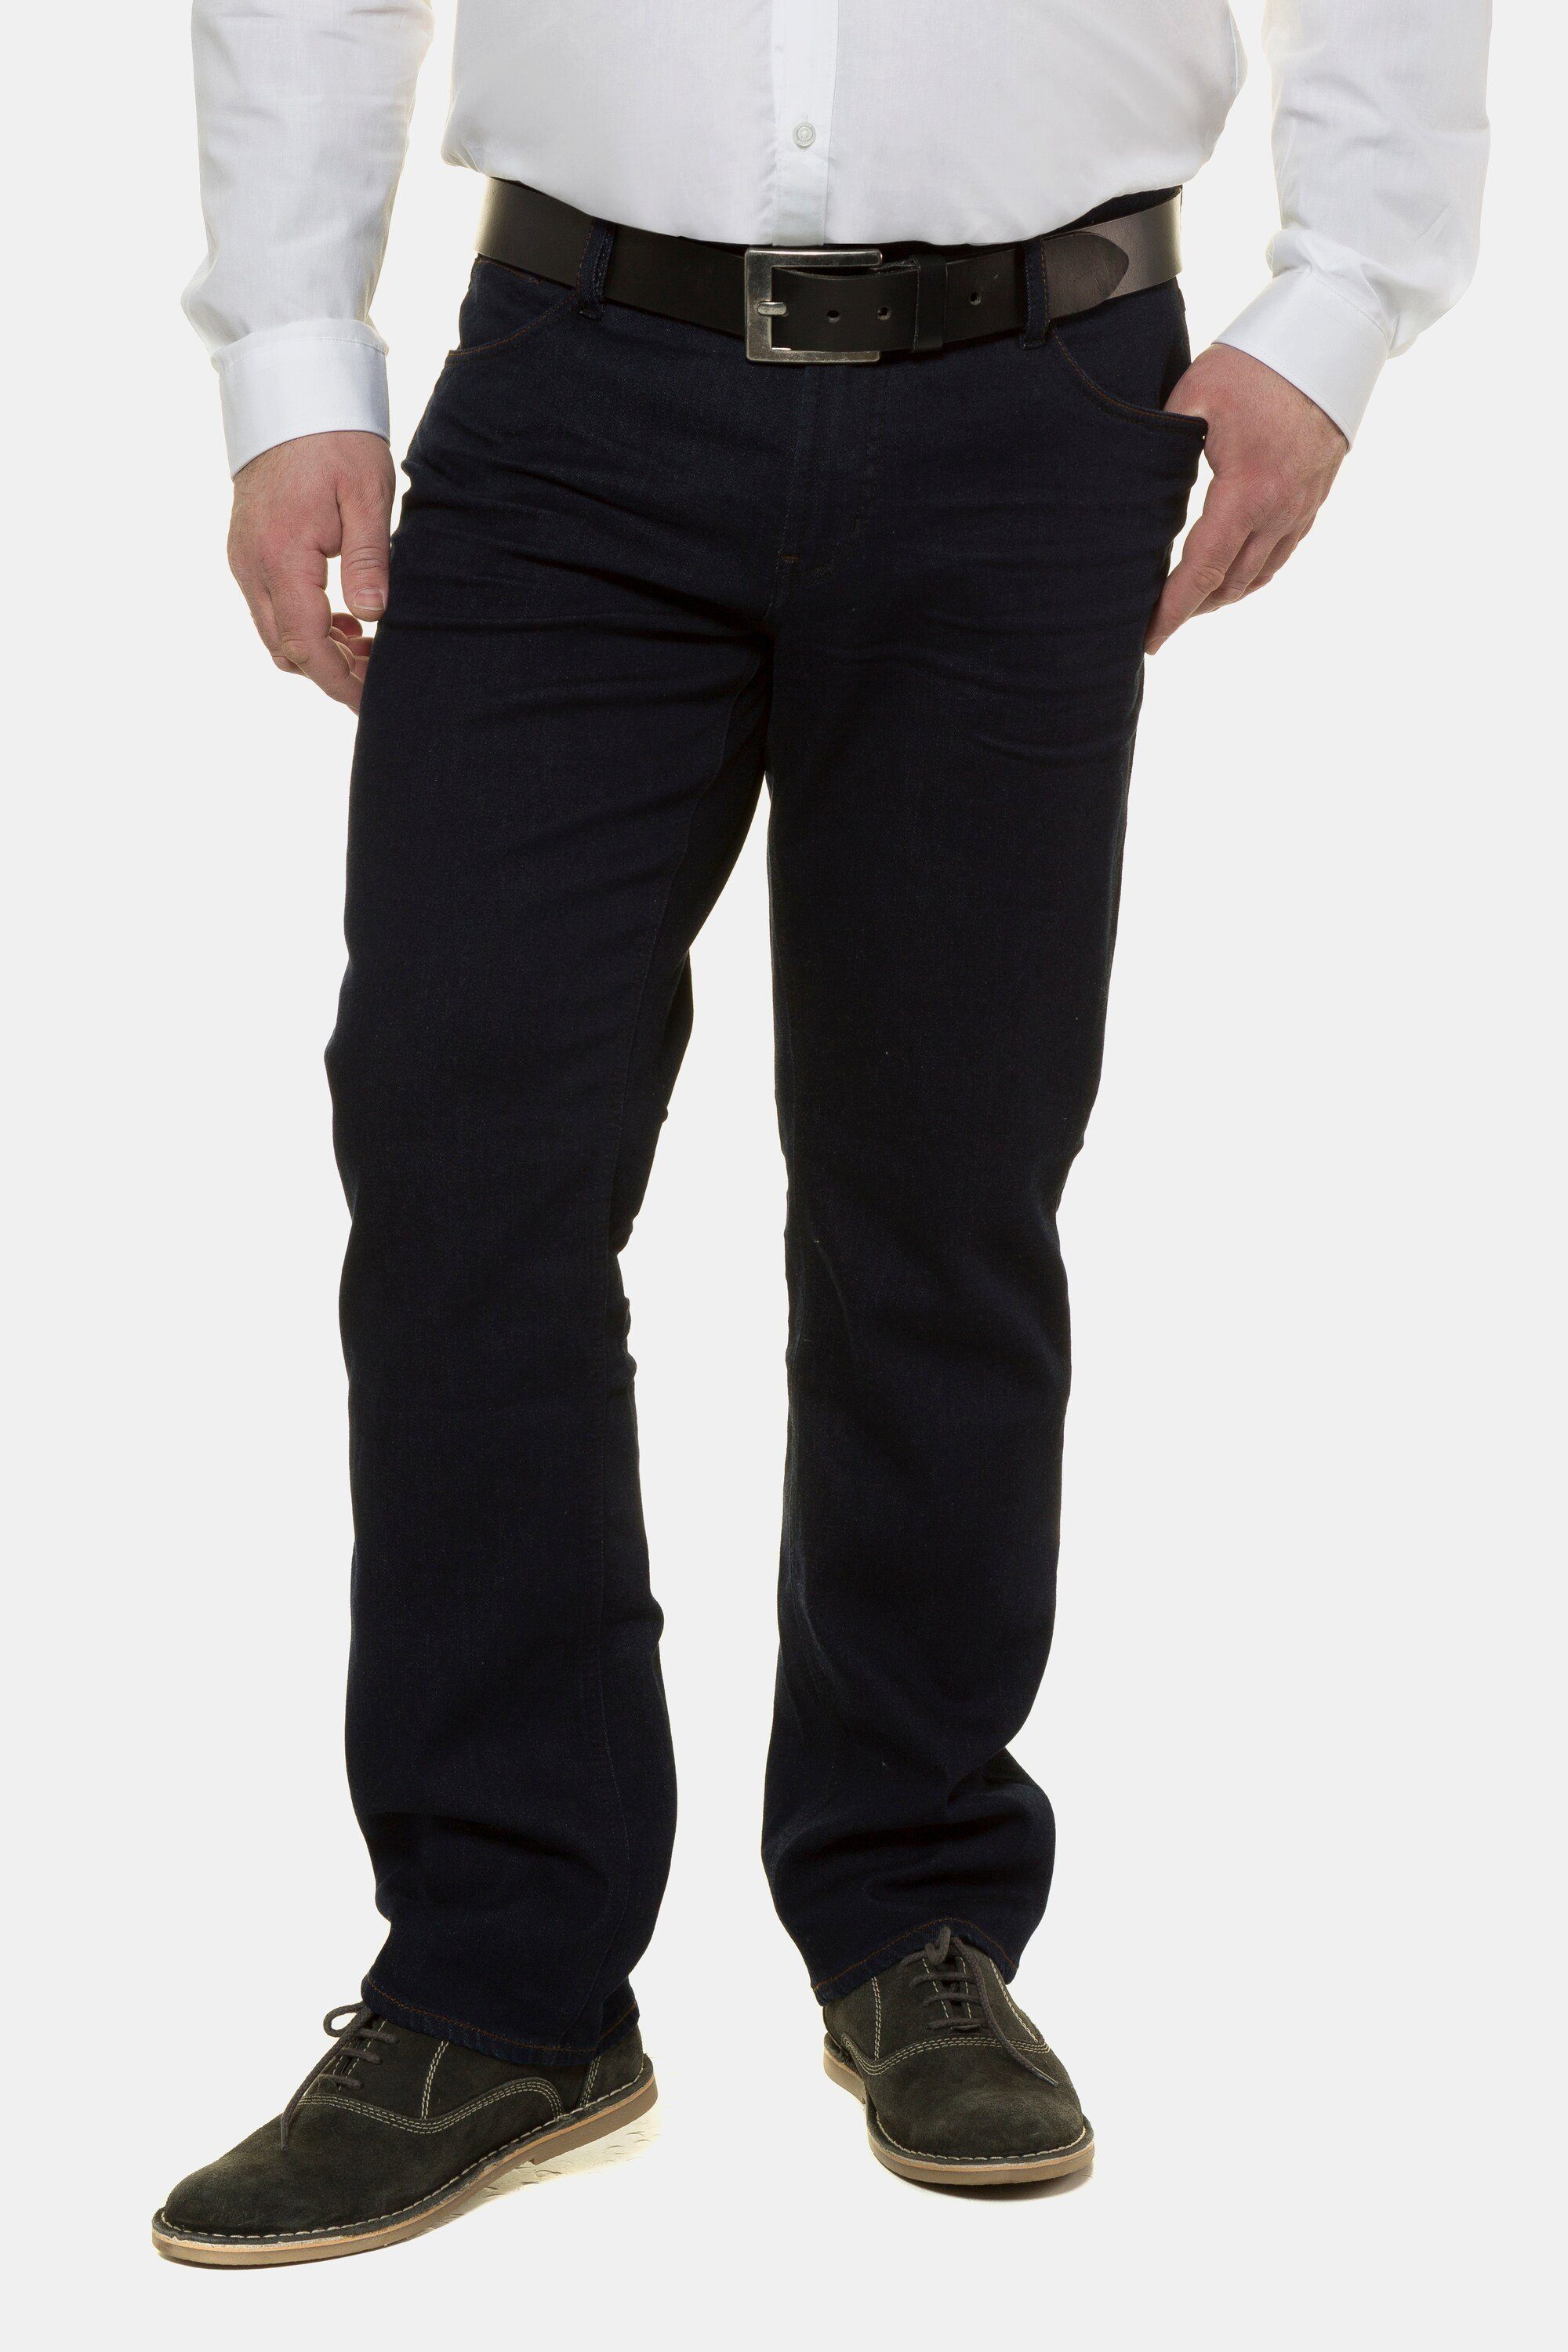 JP1880 Cargohose 70/35 dark Jeans bis Denim Bauchfit blue denim Gr